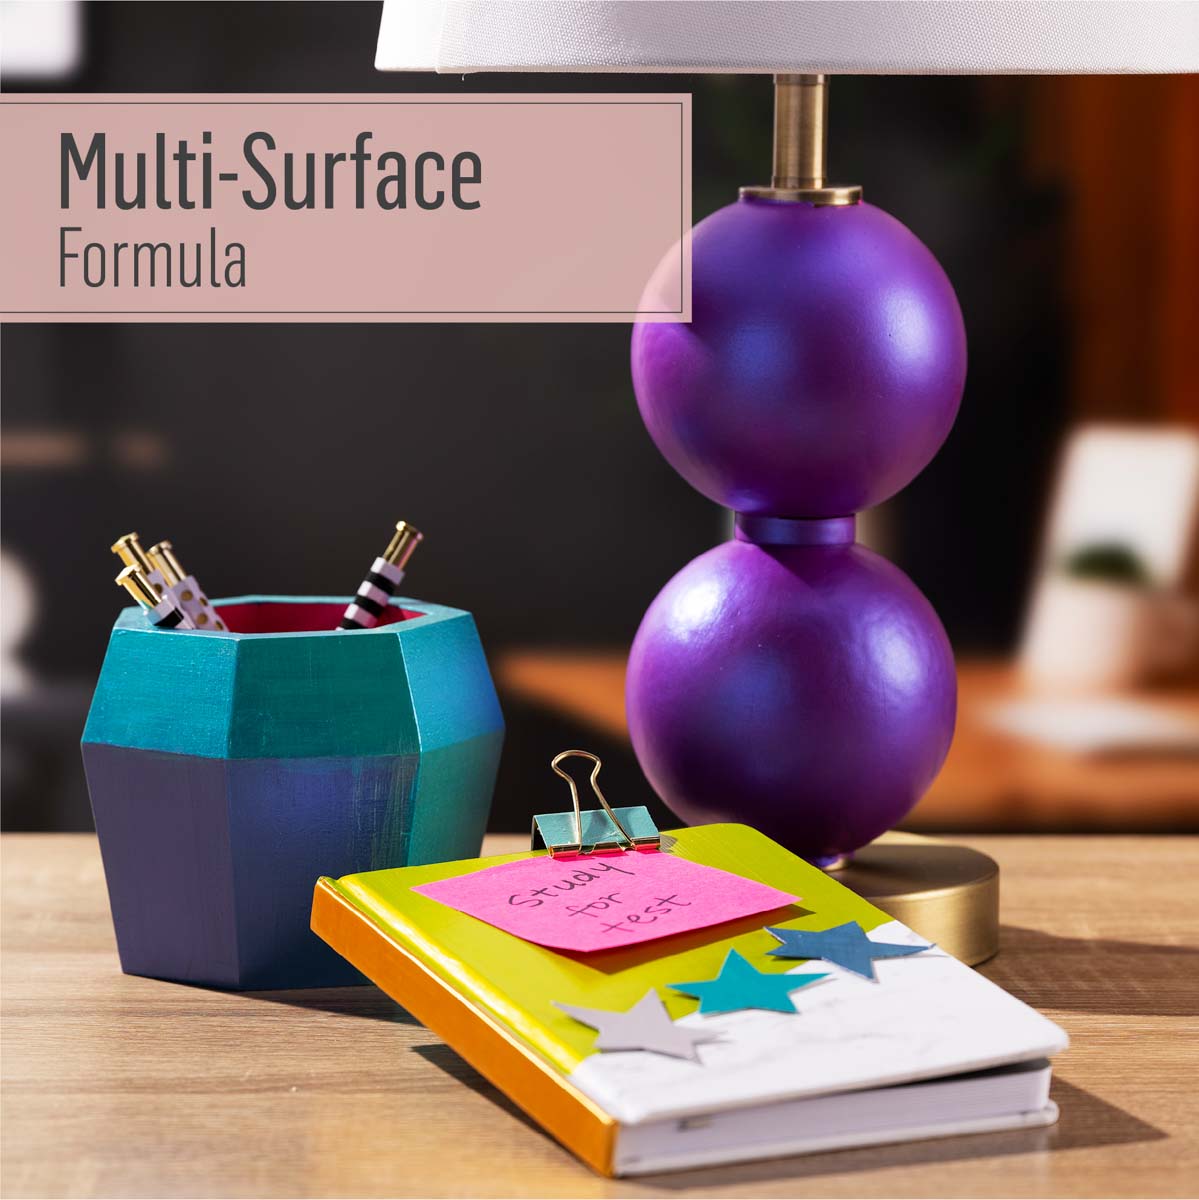 FolkArt ® Color Shift™ Acrylic Paint - Raspberry Flash, 2 oz. - 5248